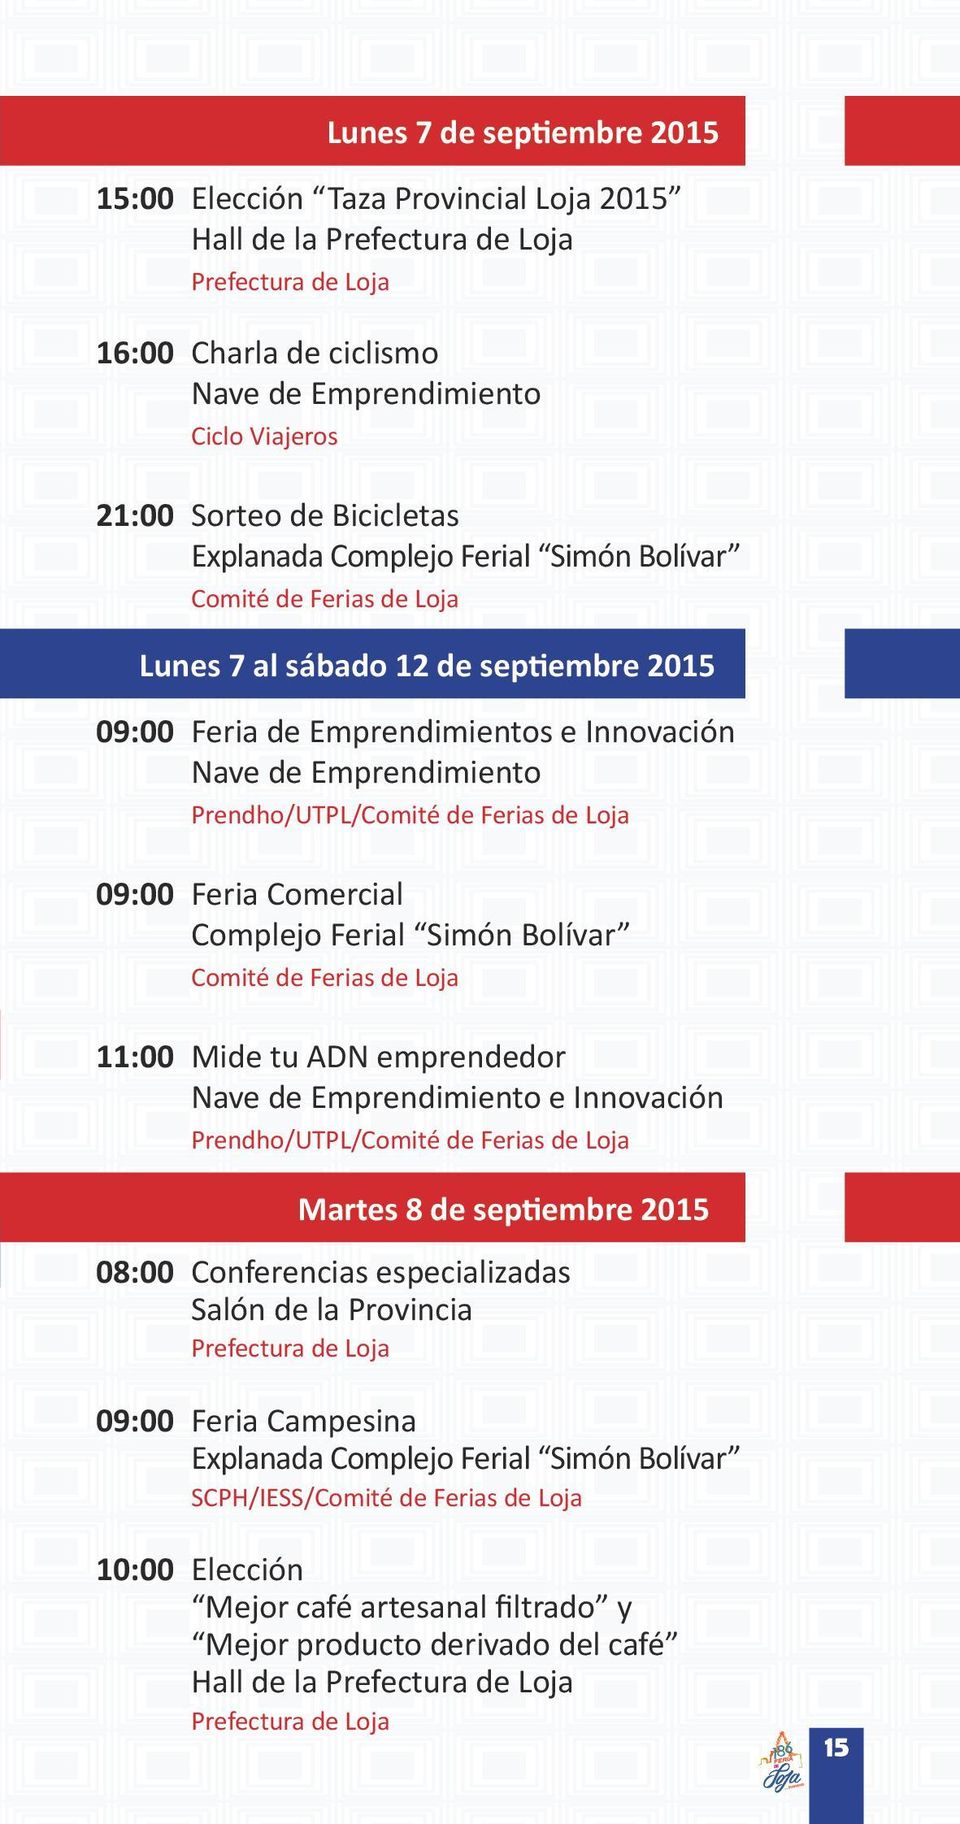 Feria Comercial 11:00 Mide tu ADN emprendedor Nave de Emprendimiento e Innovación Prendho/UTPL/ Martes 8 de septiembre 2015 08:00 Conferencias